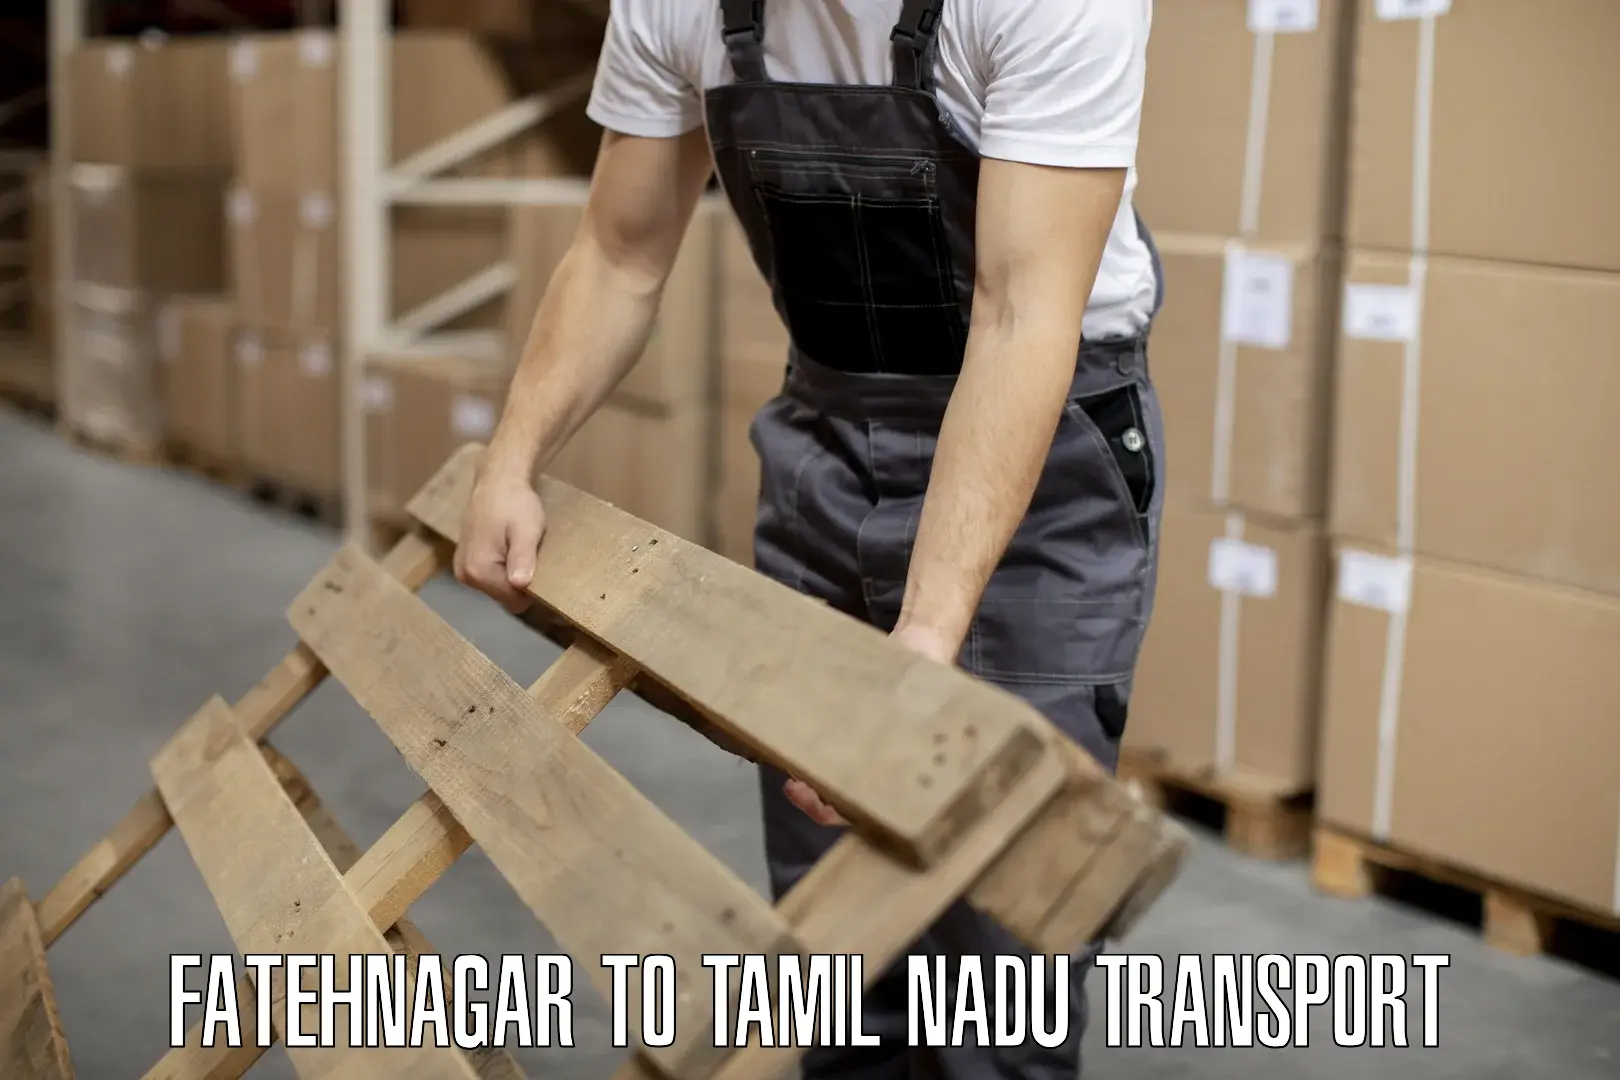 Container transport service Fatehnagar to Tamil Nadu